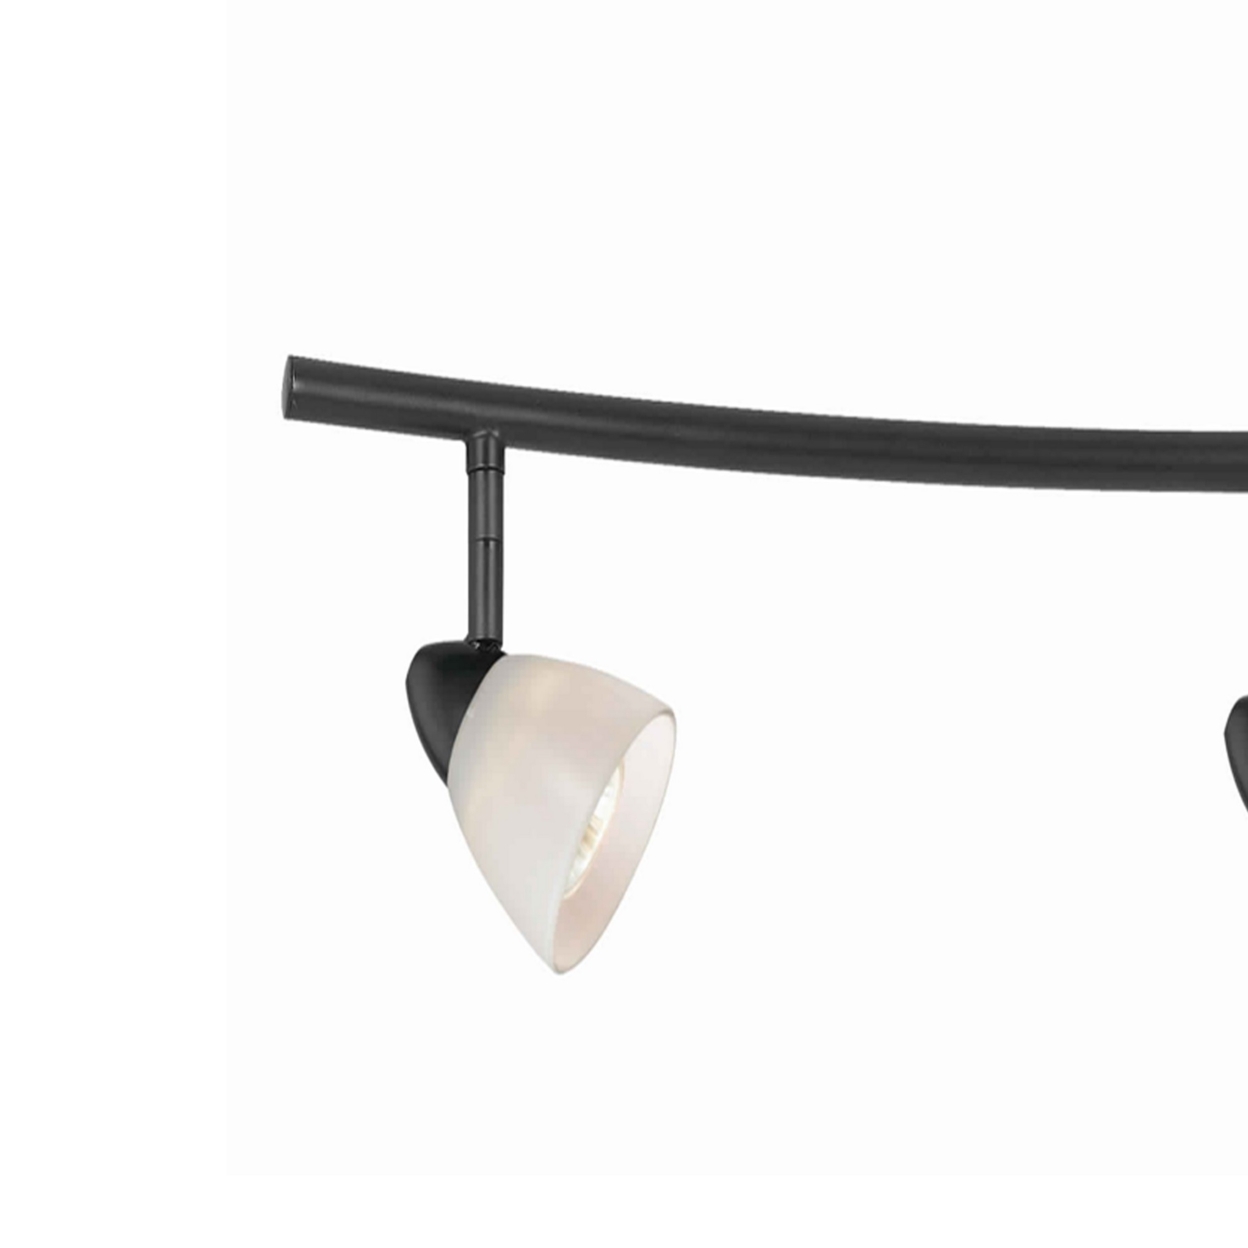 5 Light 120V Metal Track Light Fixture With Glass Shade, Black And White- Saltoro Sherpi